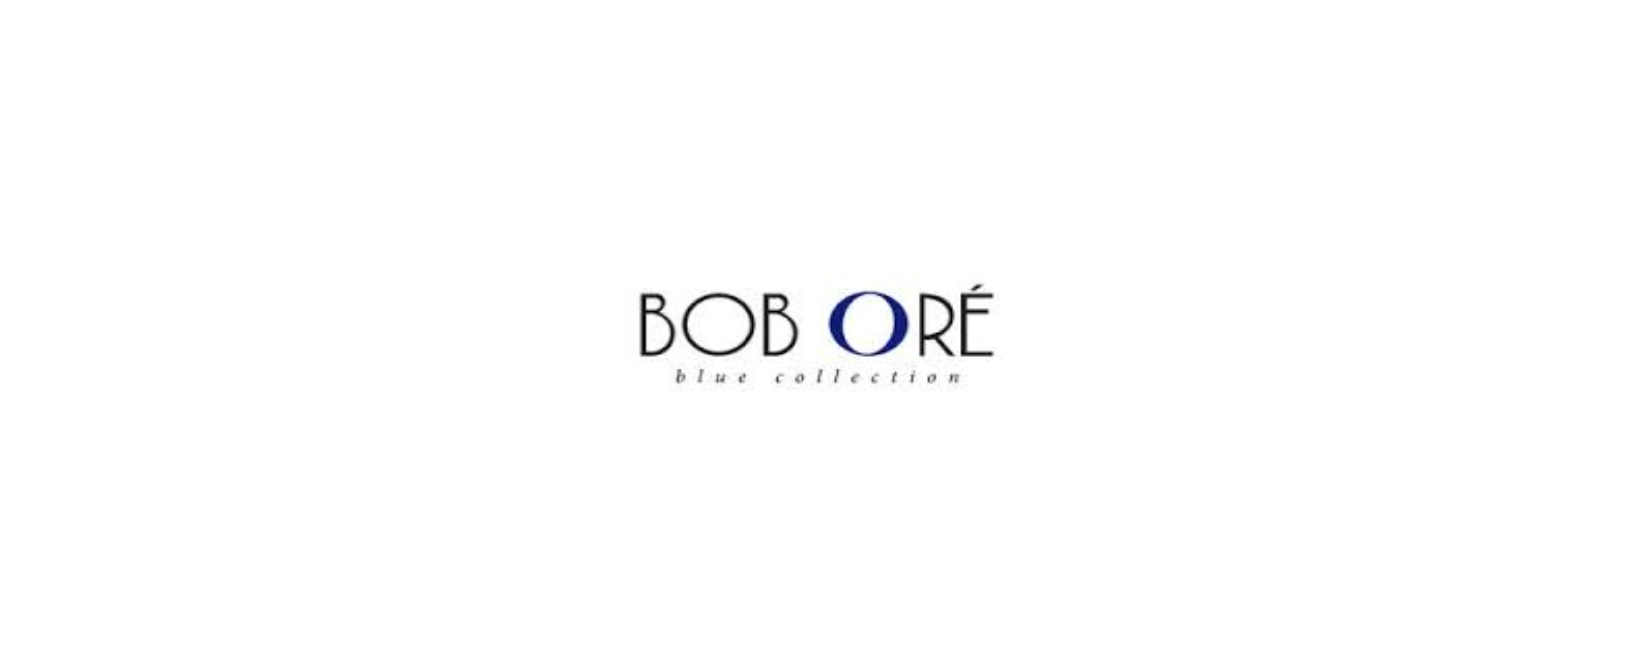 Bob Ore Blue Collection Discount Code 2023